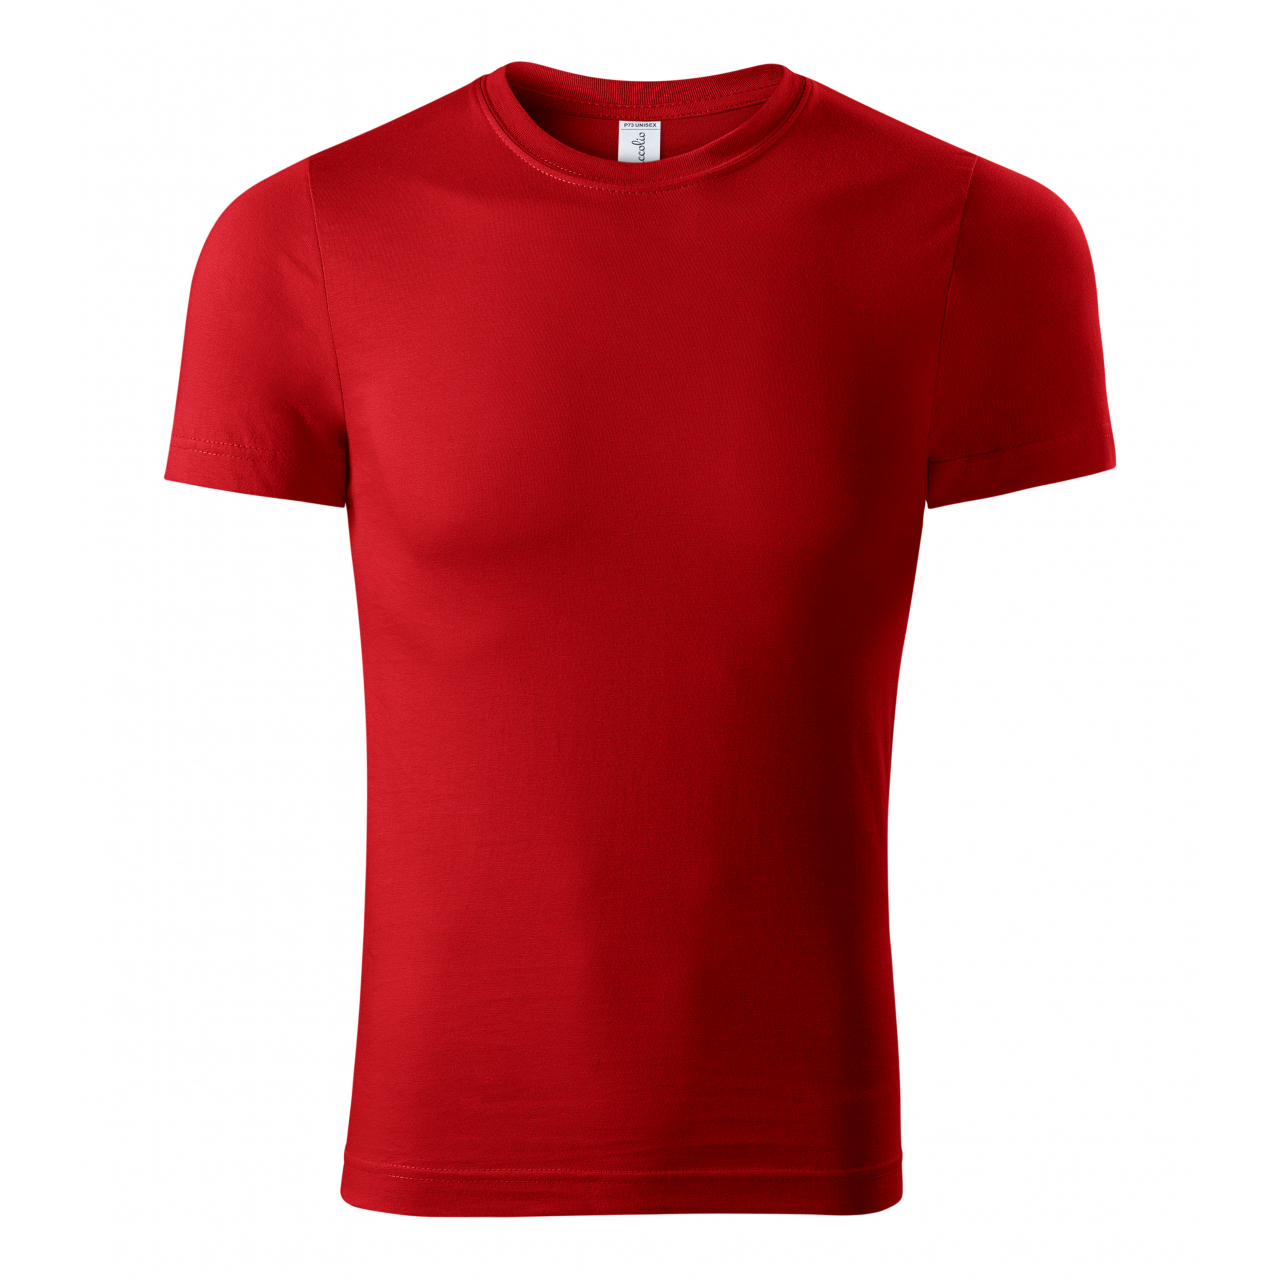 Tričko unisex Piccolio Paint - červené, XS